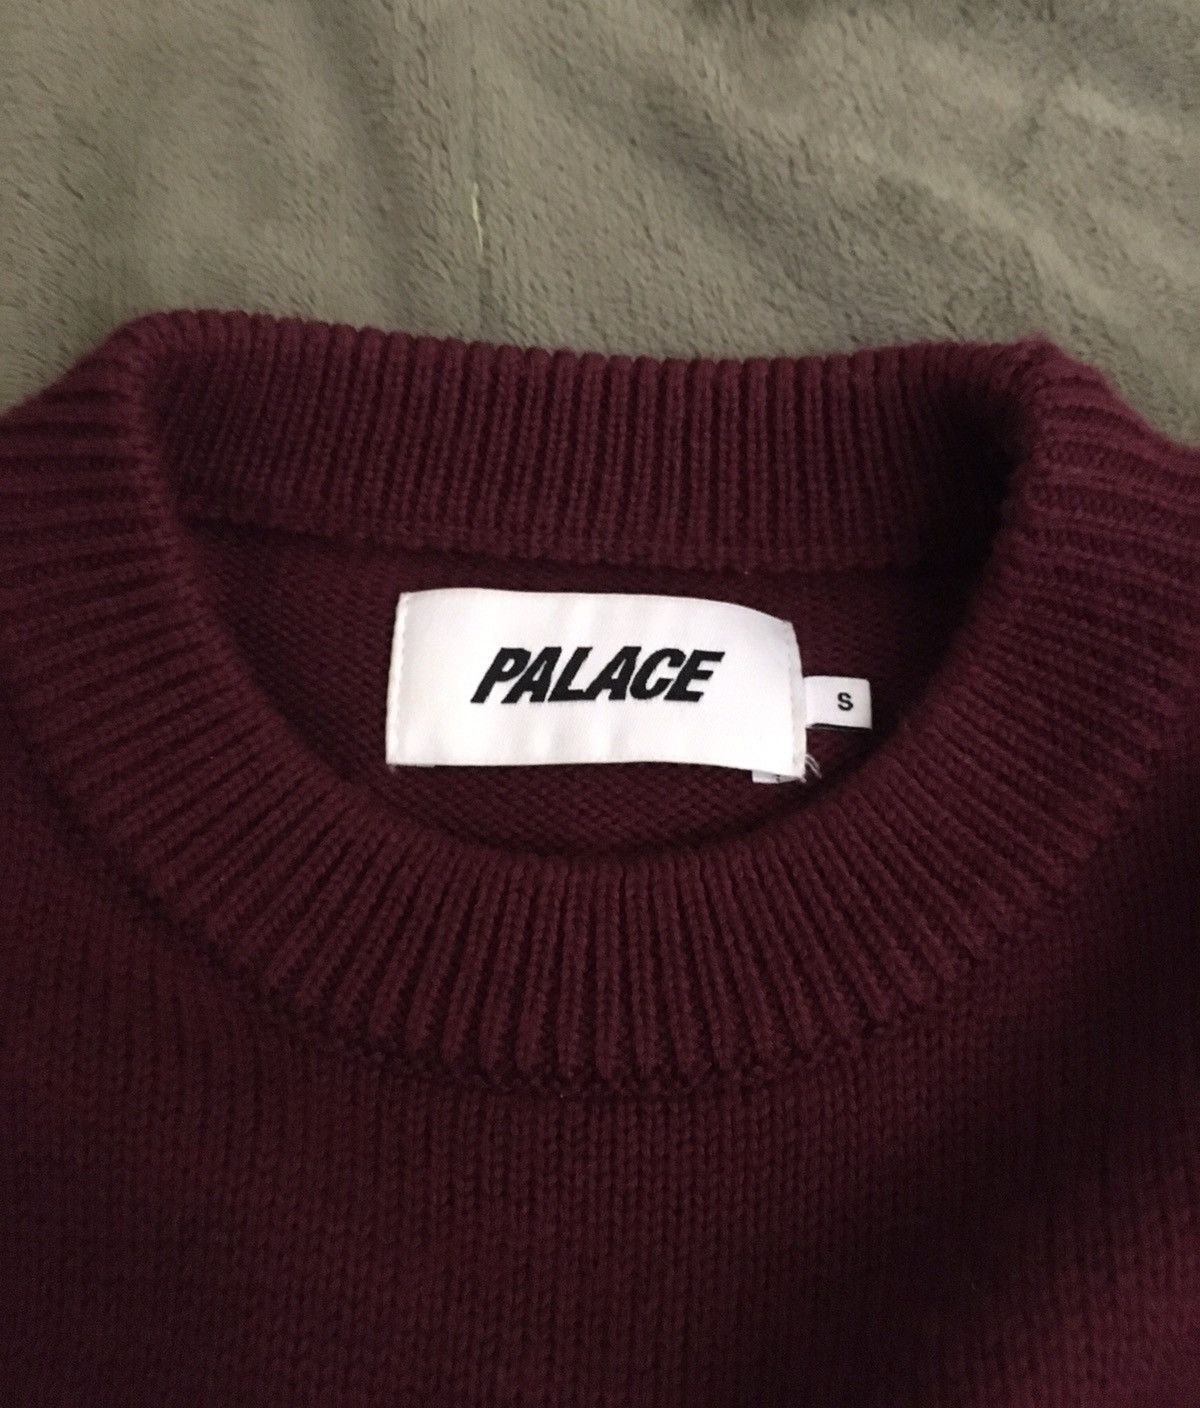 Palace Preppy palace sweater Size US S / EU 44-46 / 1 - 3 Thumbnail